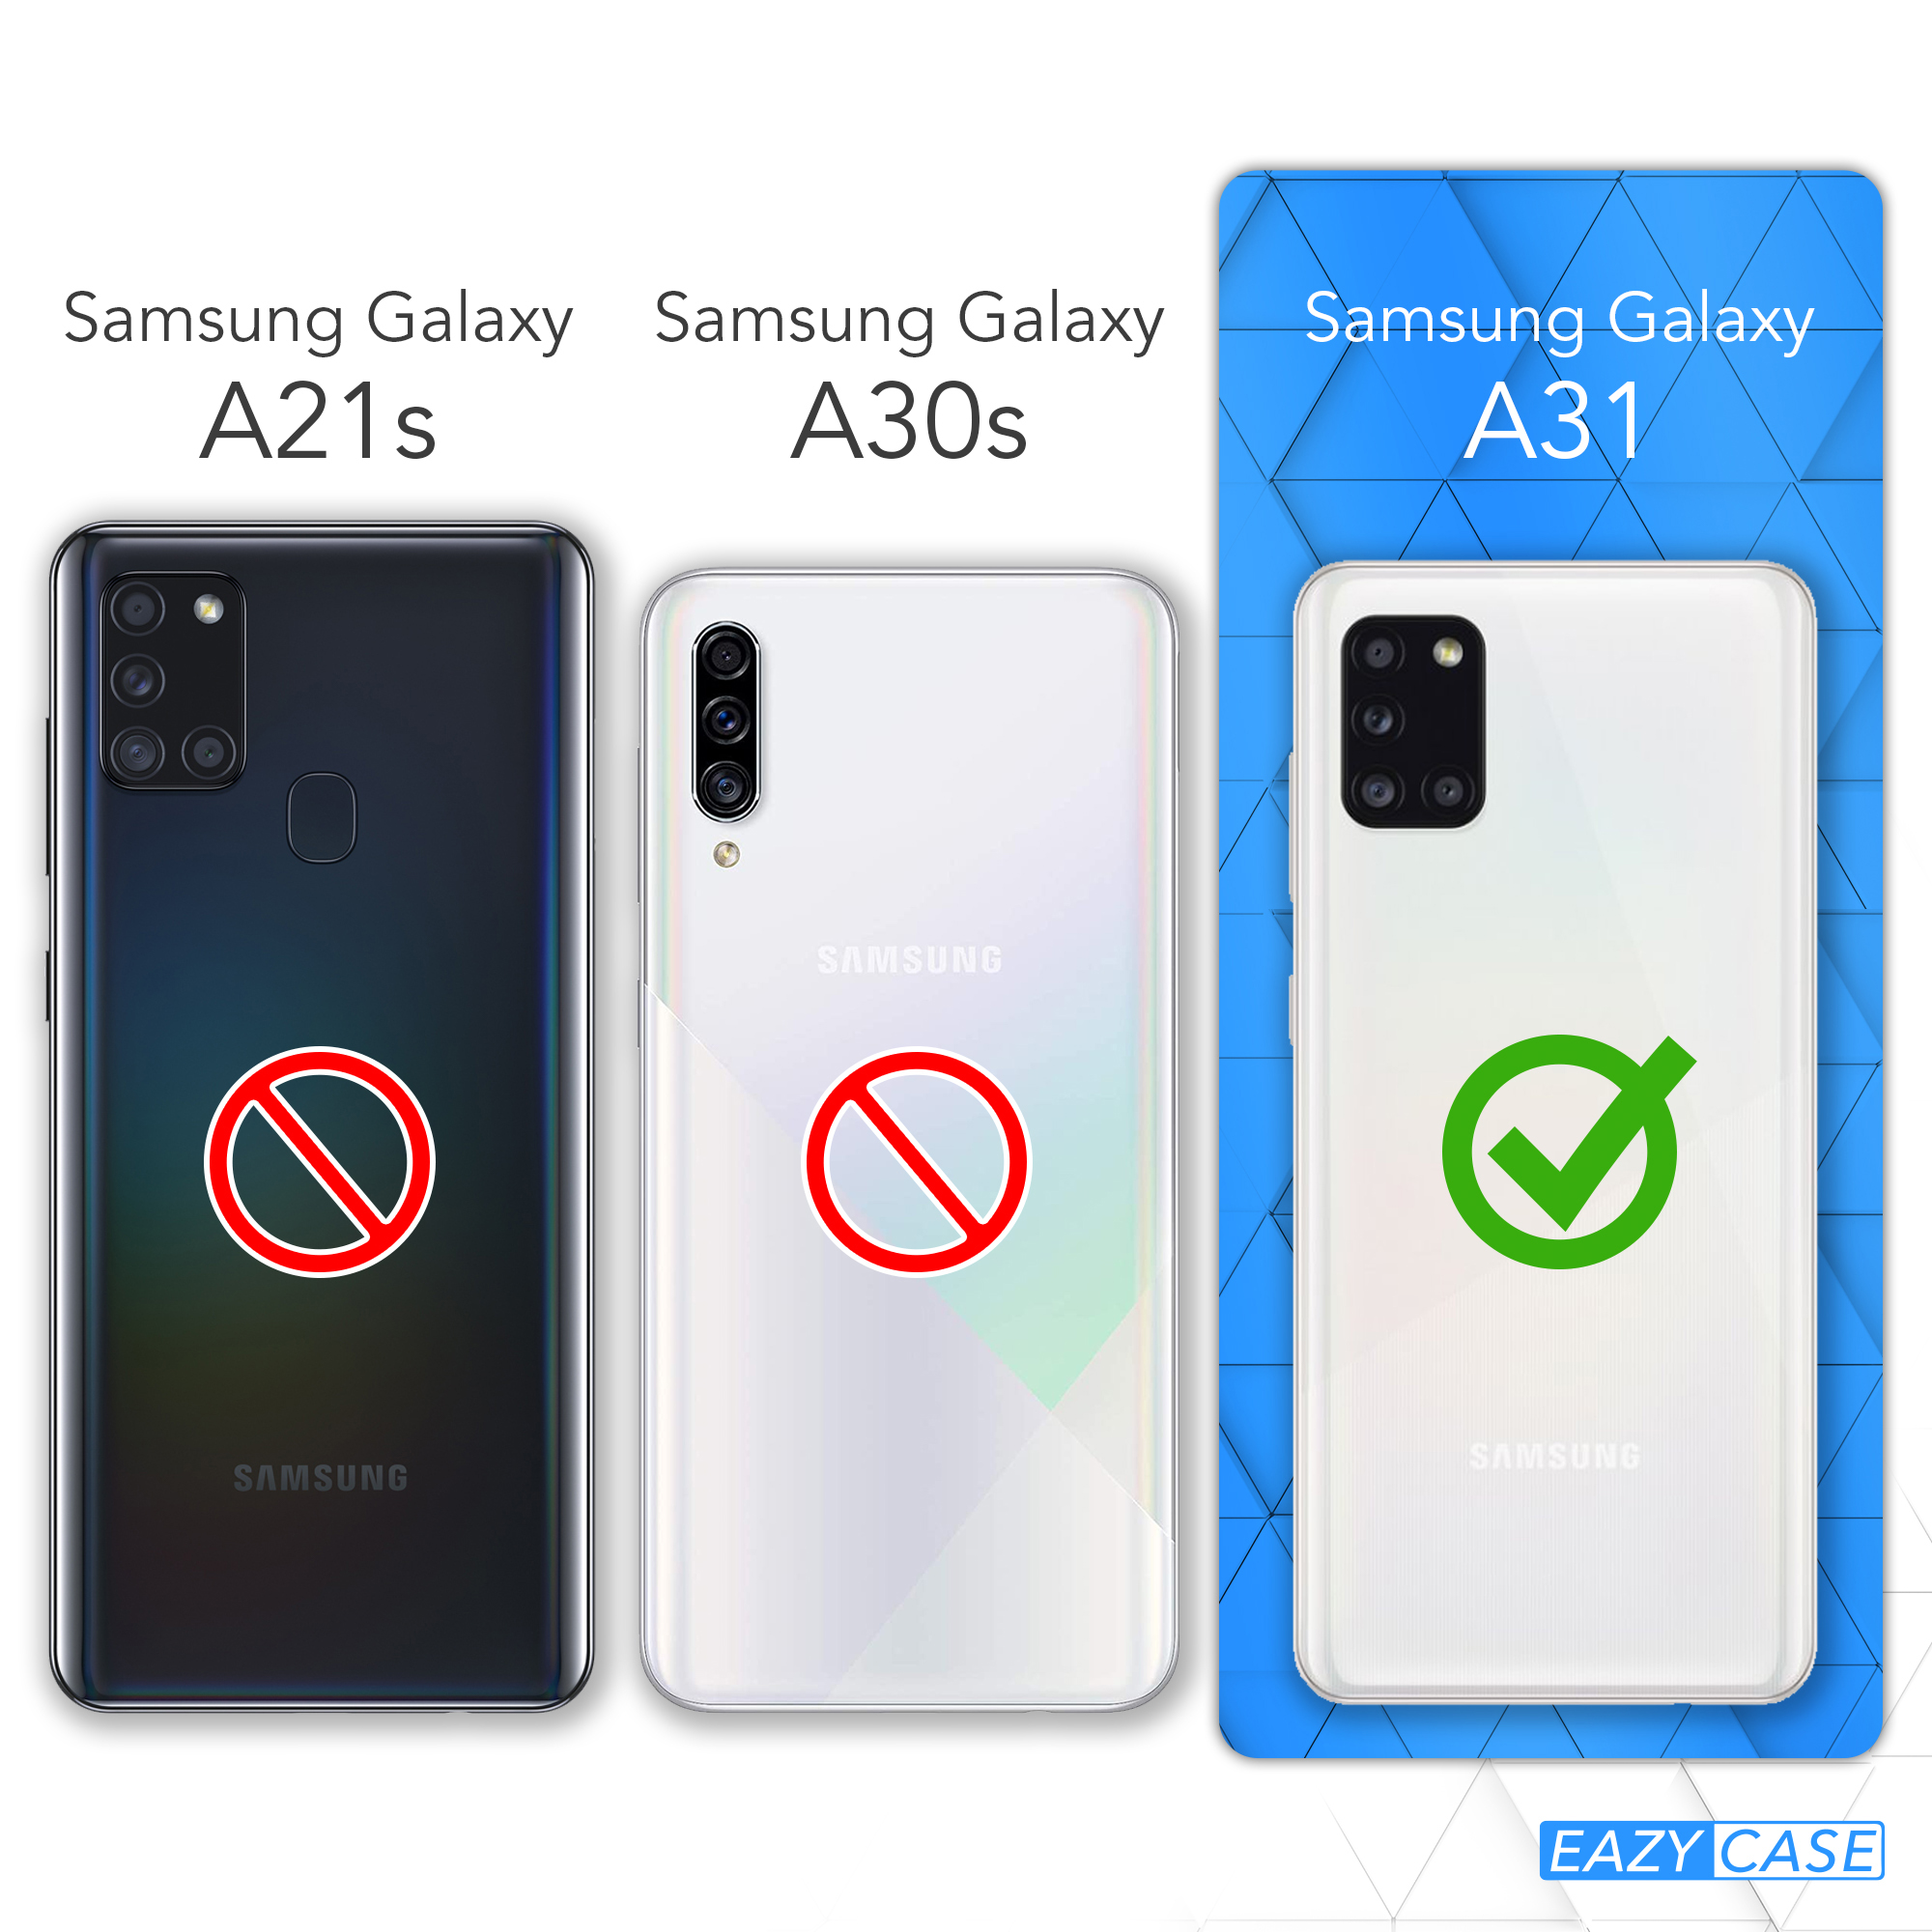 Clear A31, EAZY Samsung, CASE Galaxy Umhängetasche, Cover Blau mit Umhängeband,